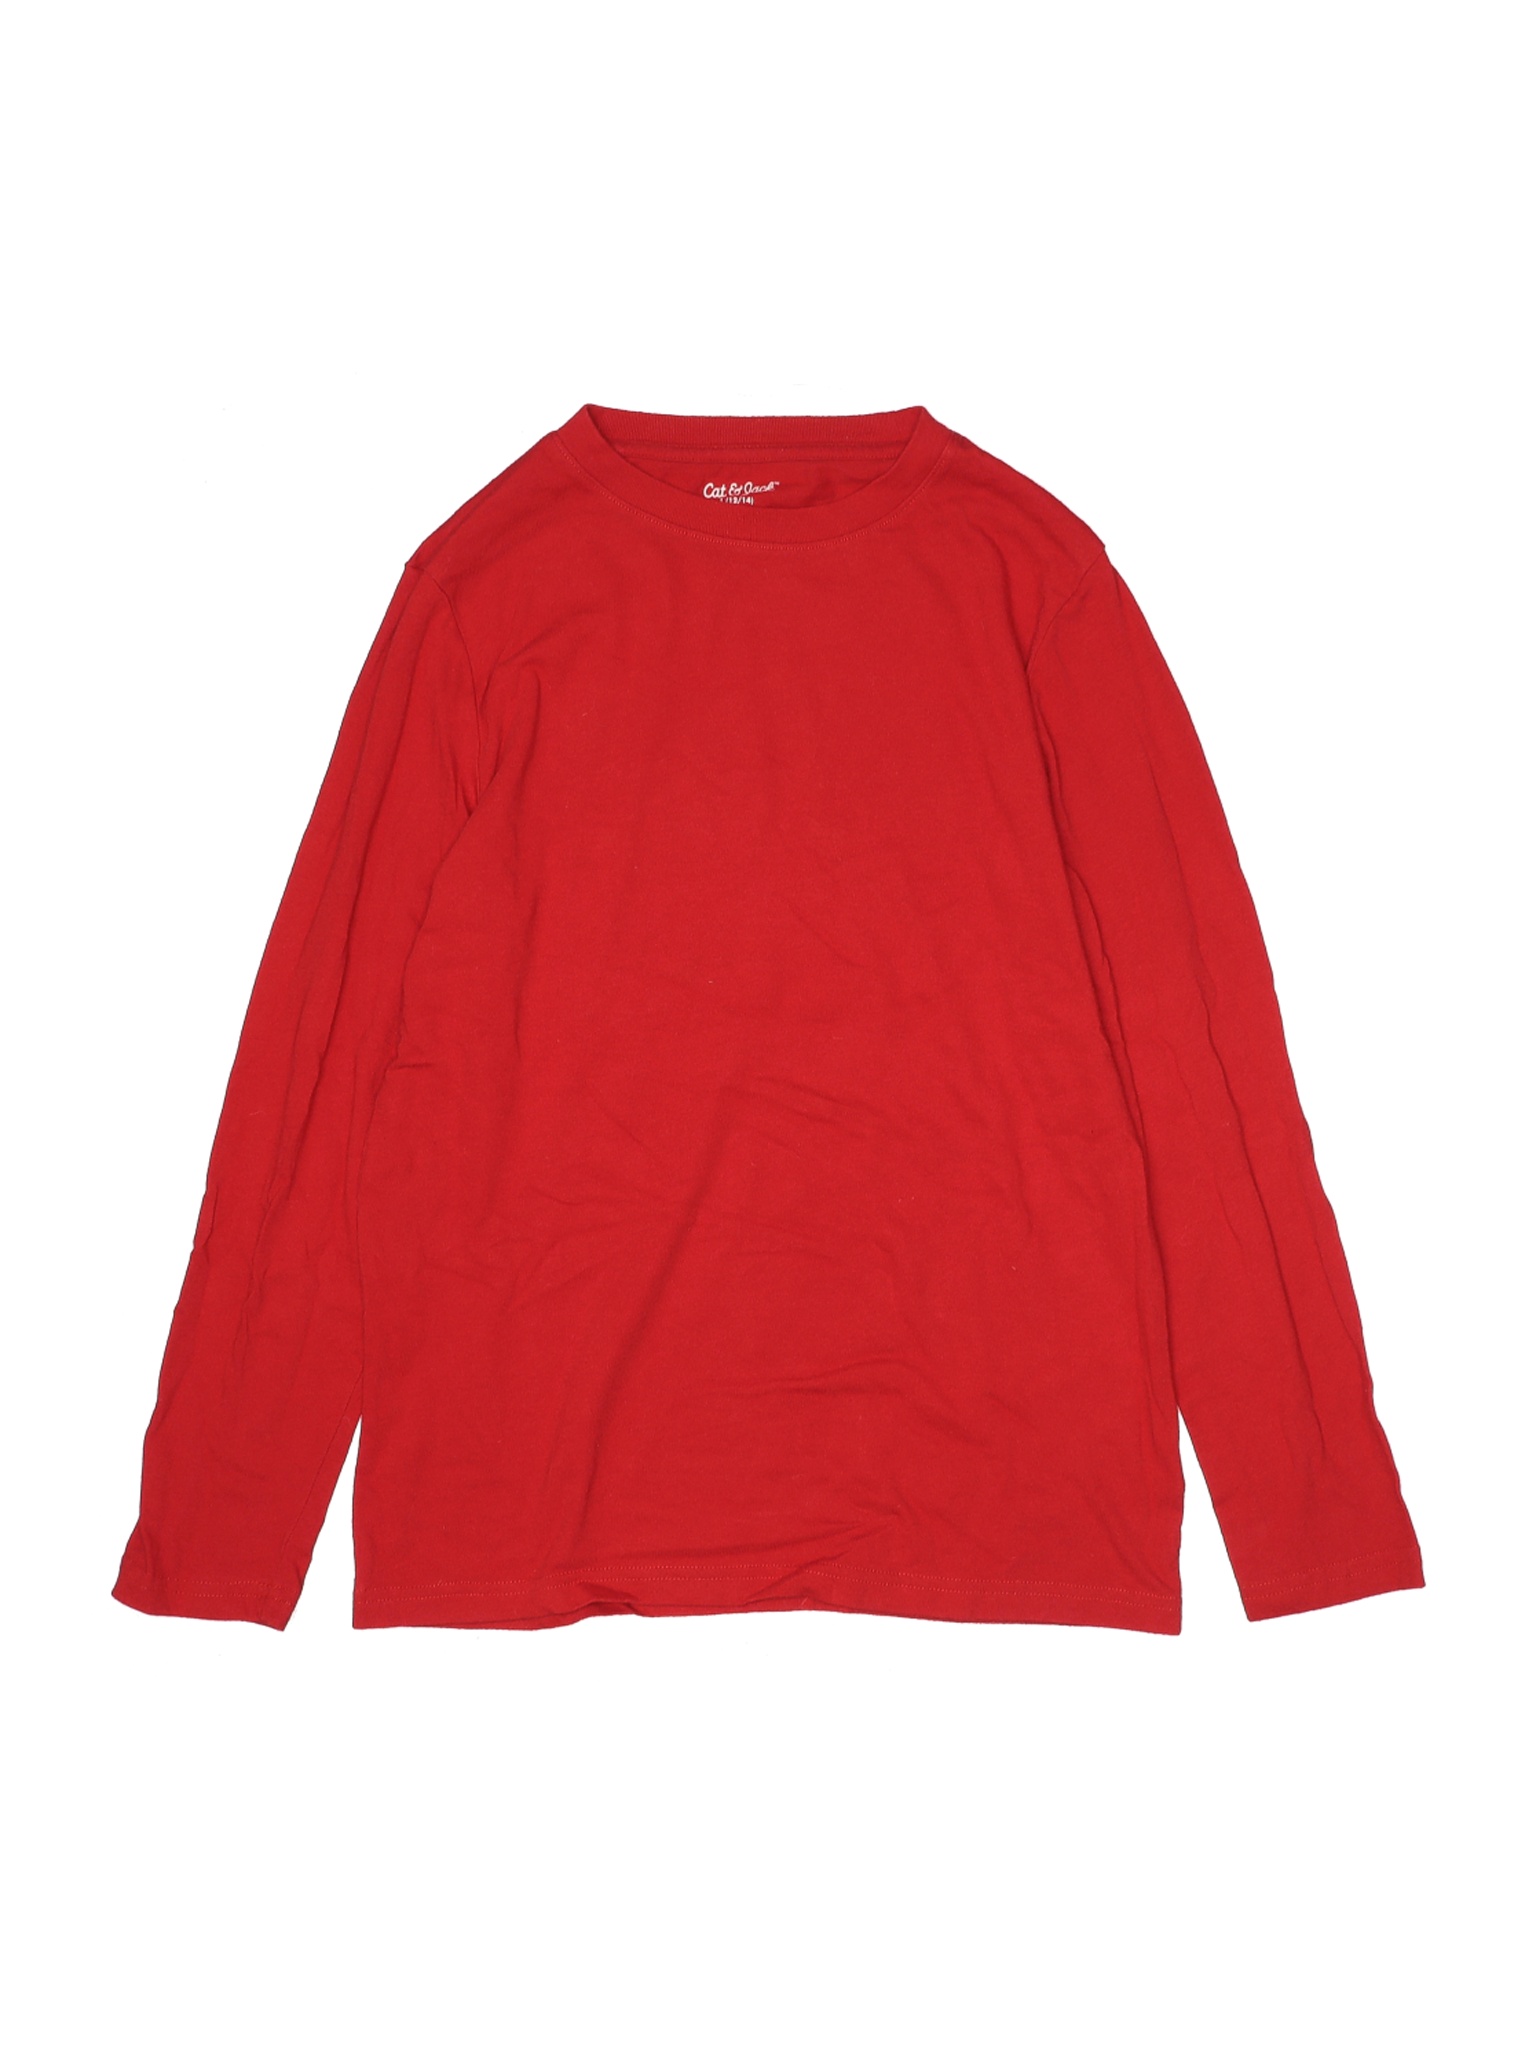 Carter's Boys Red Long Sleeve T-Shirt 12 | eBay